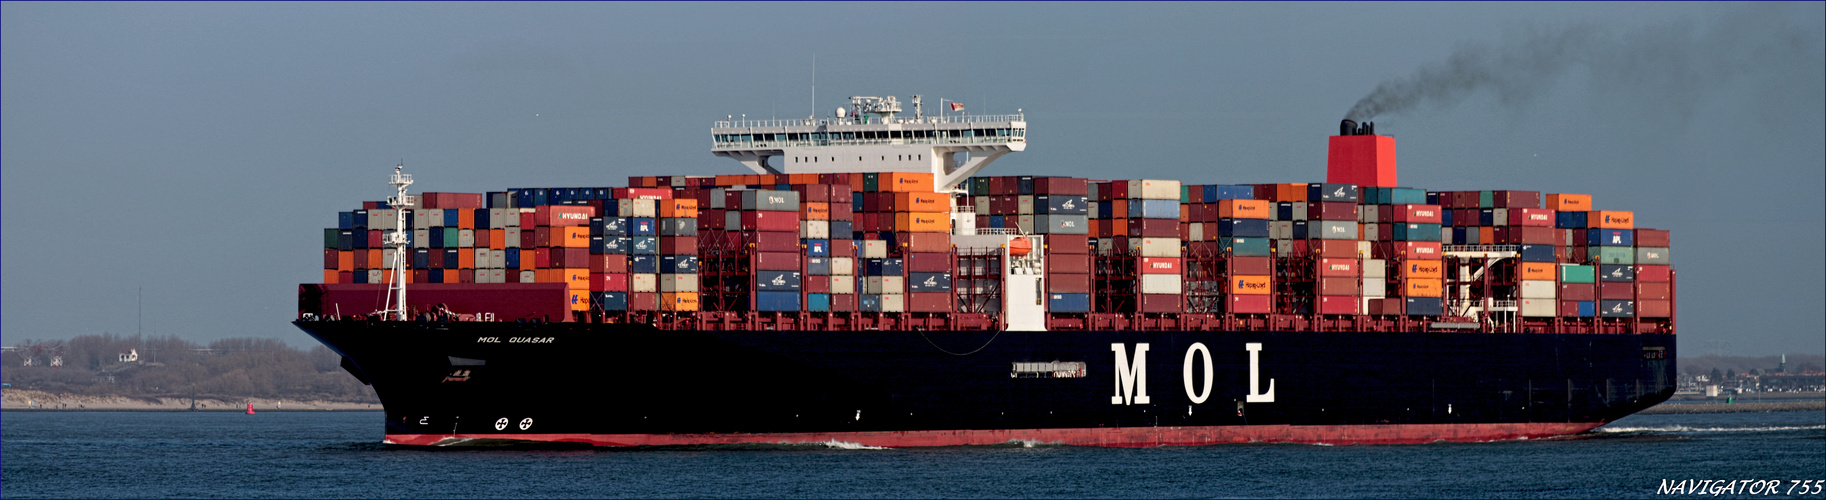 MOL QUASAR / Container Vessel / Rotterdam / Bitte scrollen!